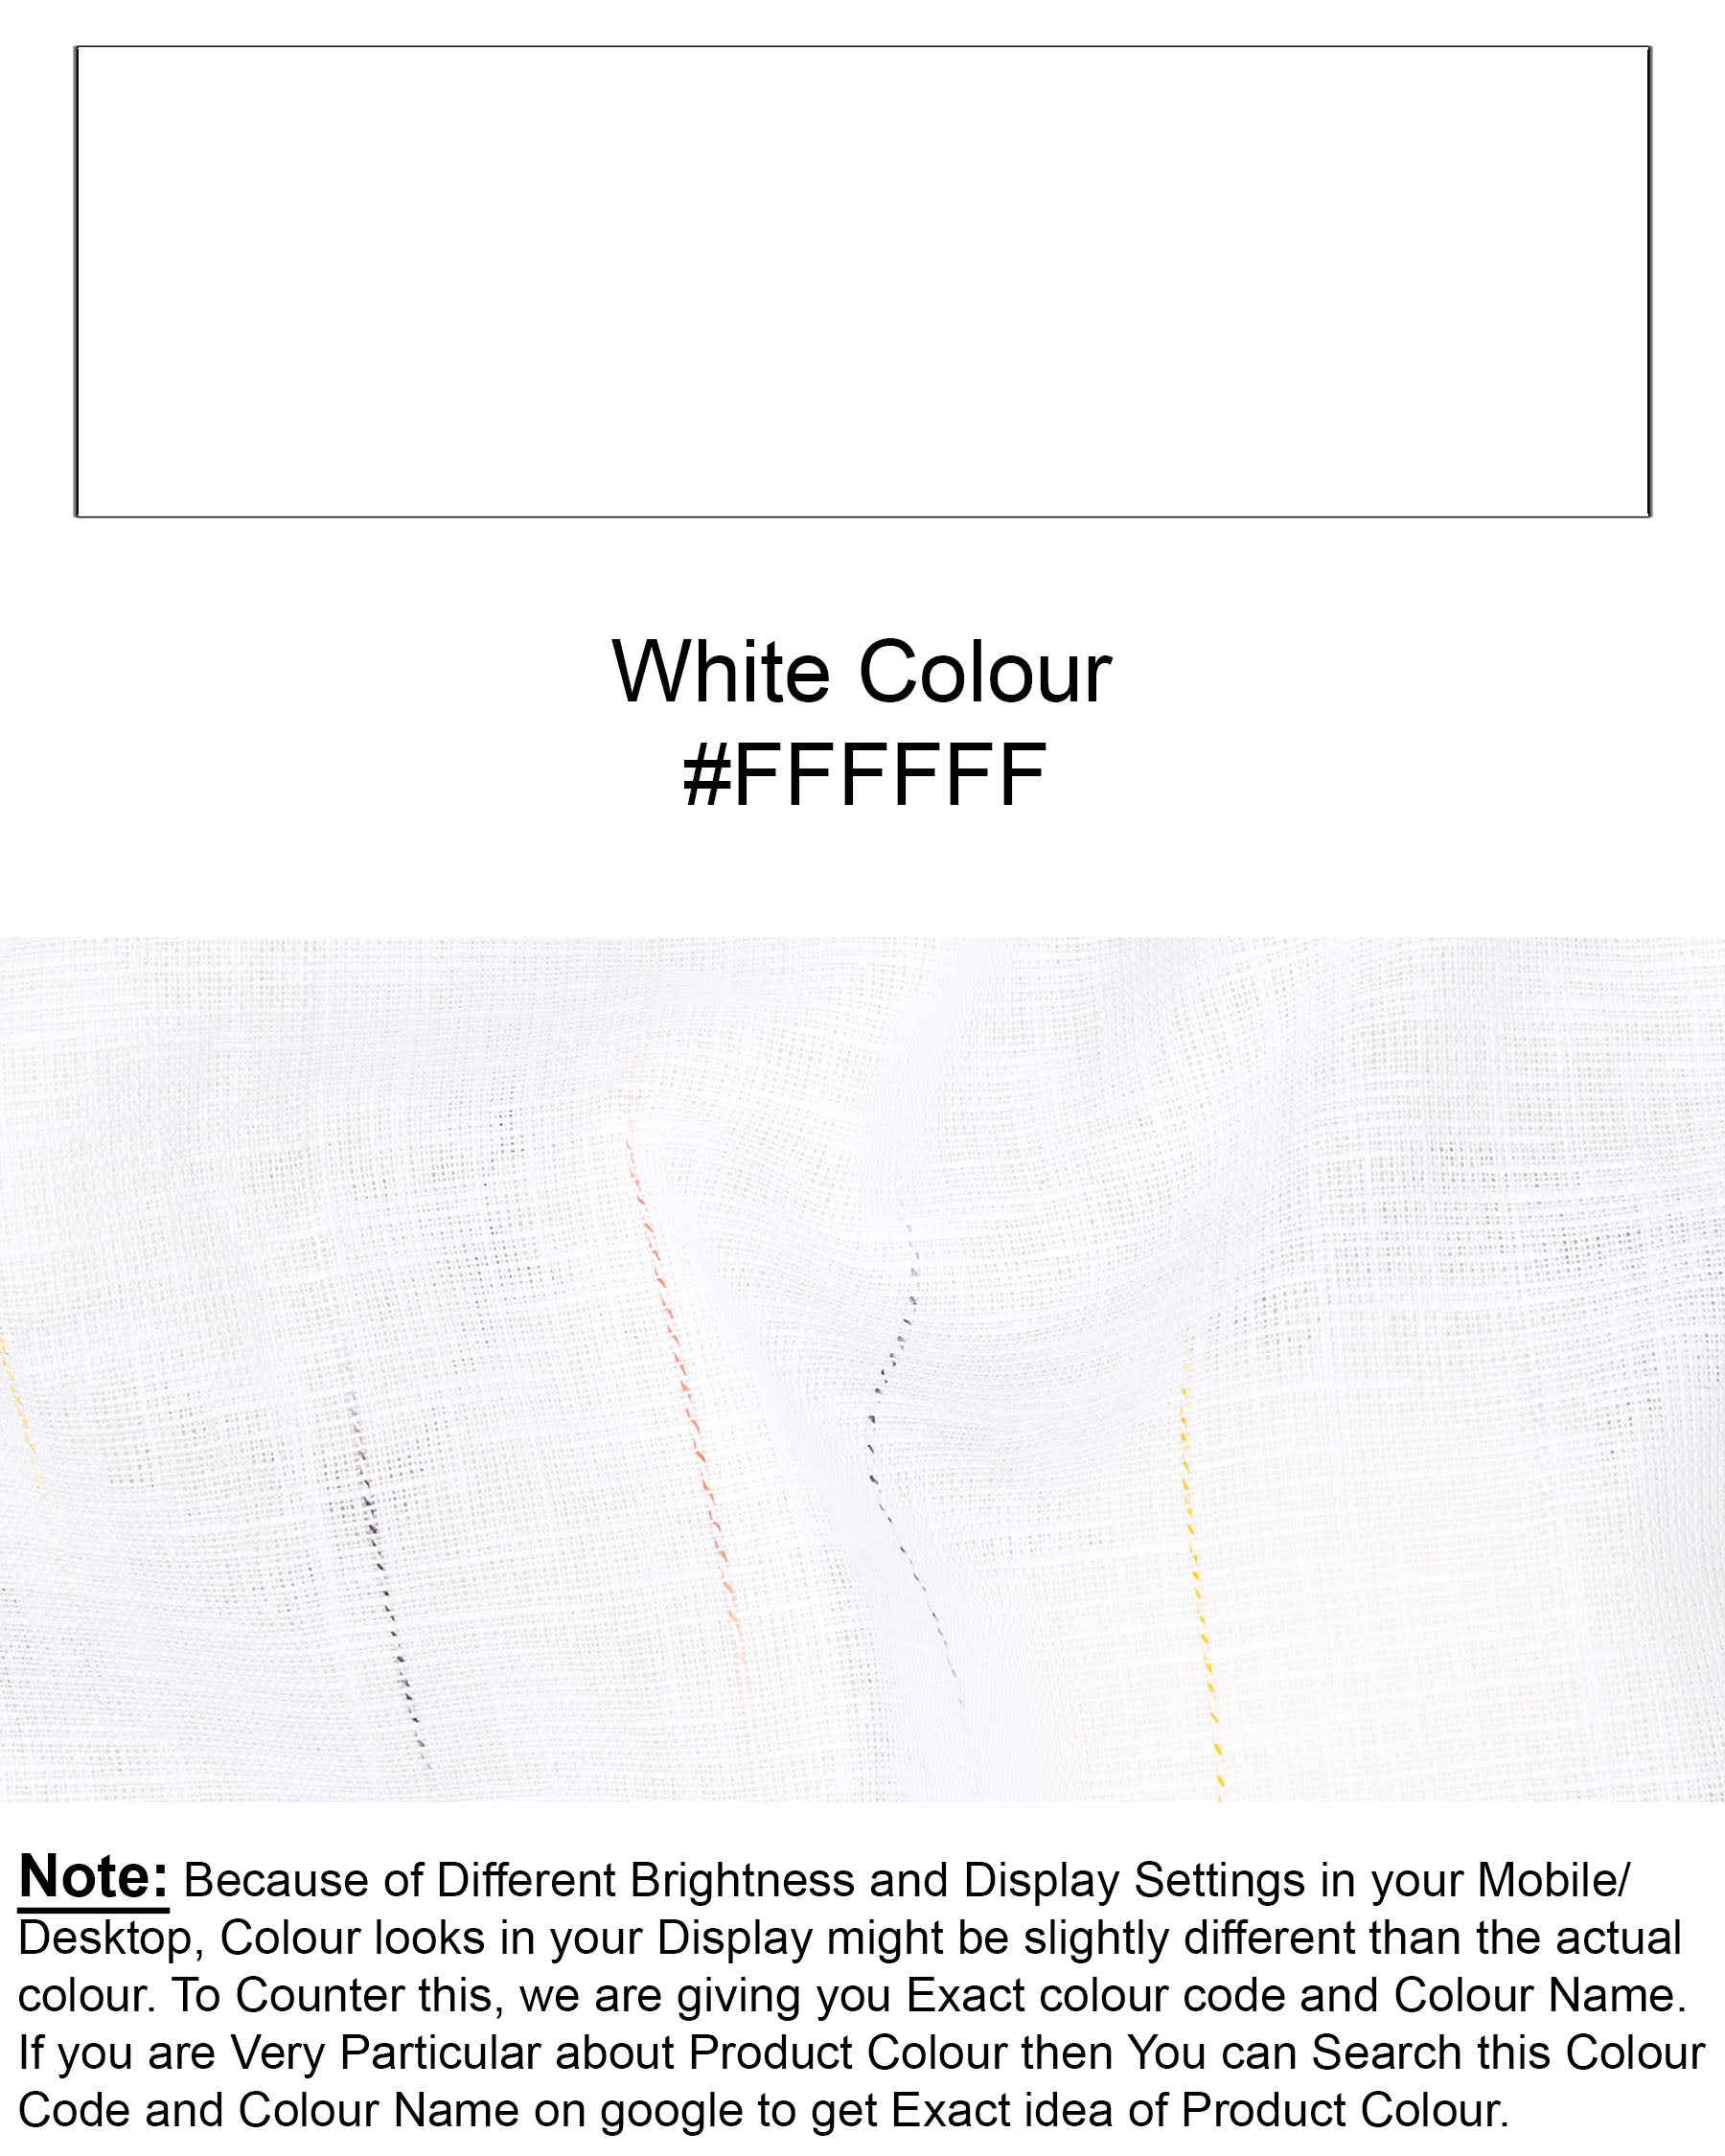 Bright White Half Vertical Half Horizontal Textured Luxurious Linen Shirt 7052-38, 7052-H-38, 7052-39, 7052-H-39, 7052-40, 7052-H-40, 7052-42, 7052-H-42, 7052-44, 7052-H-44, 7052-46, 7052-H-46, 7052-48, 7052-H-48, 7052-50, 7052-H-50, 7052-52, 7052-H-52